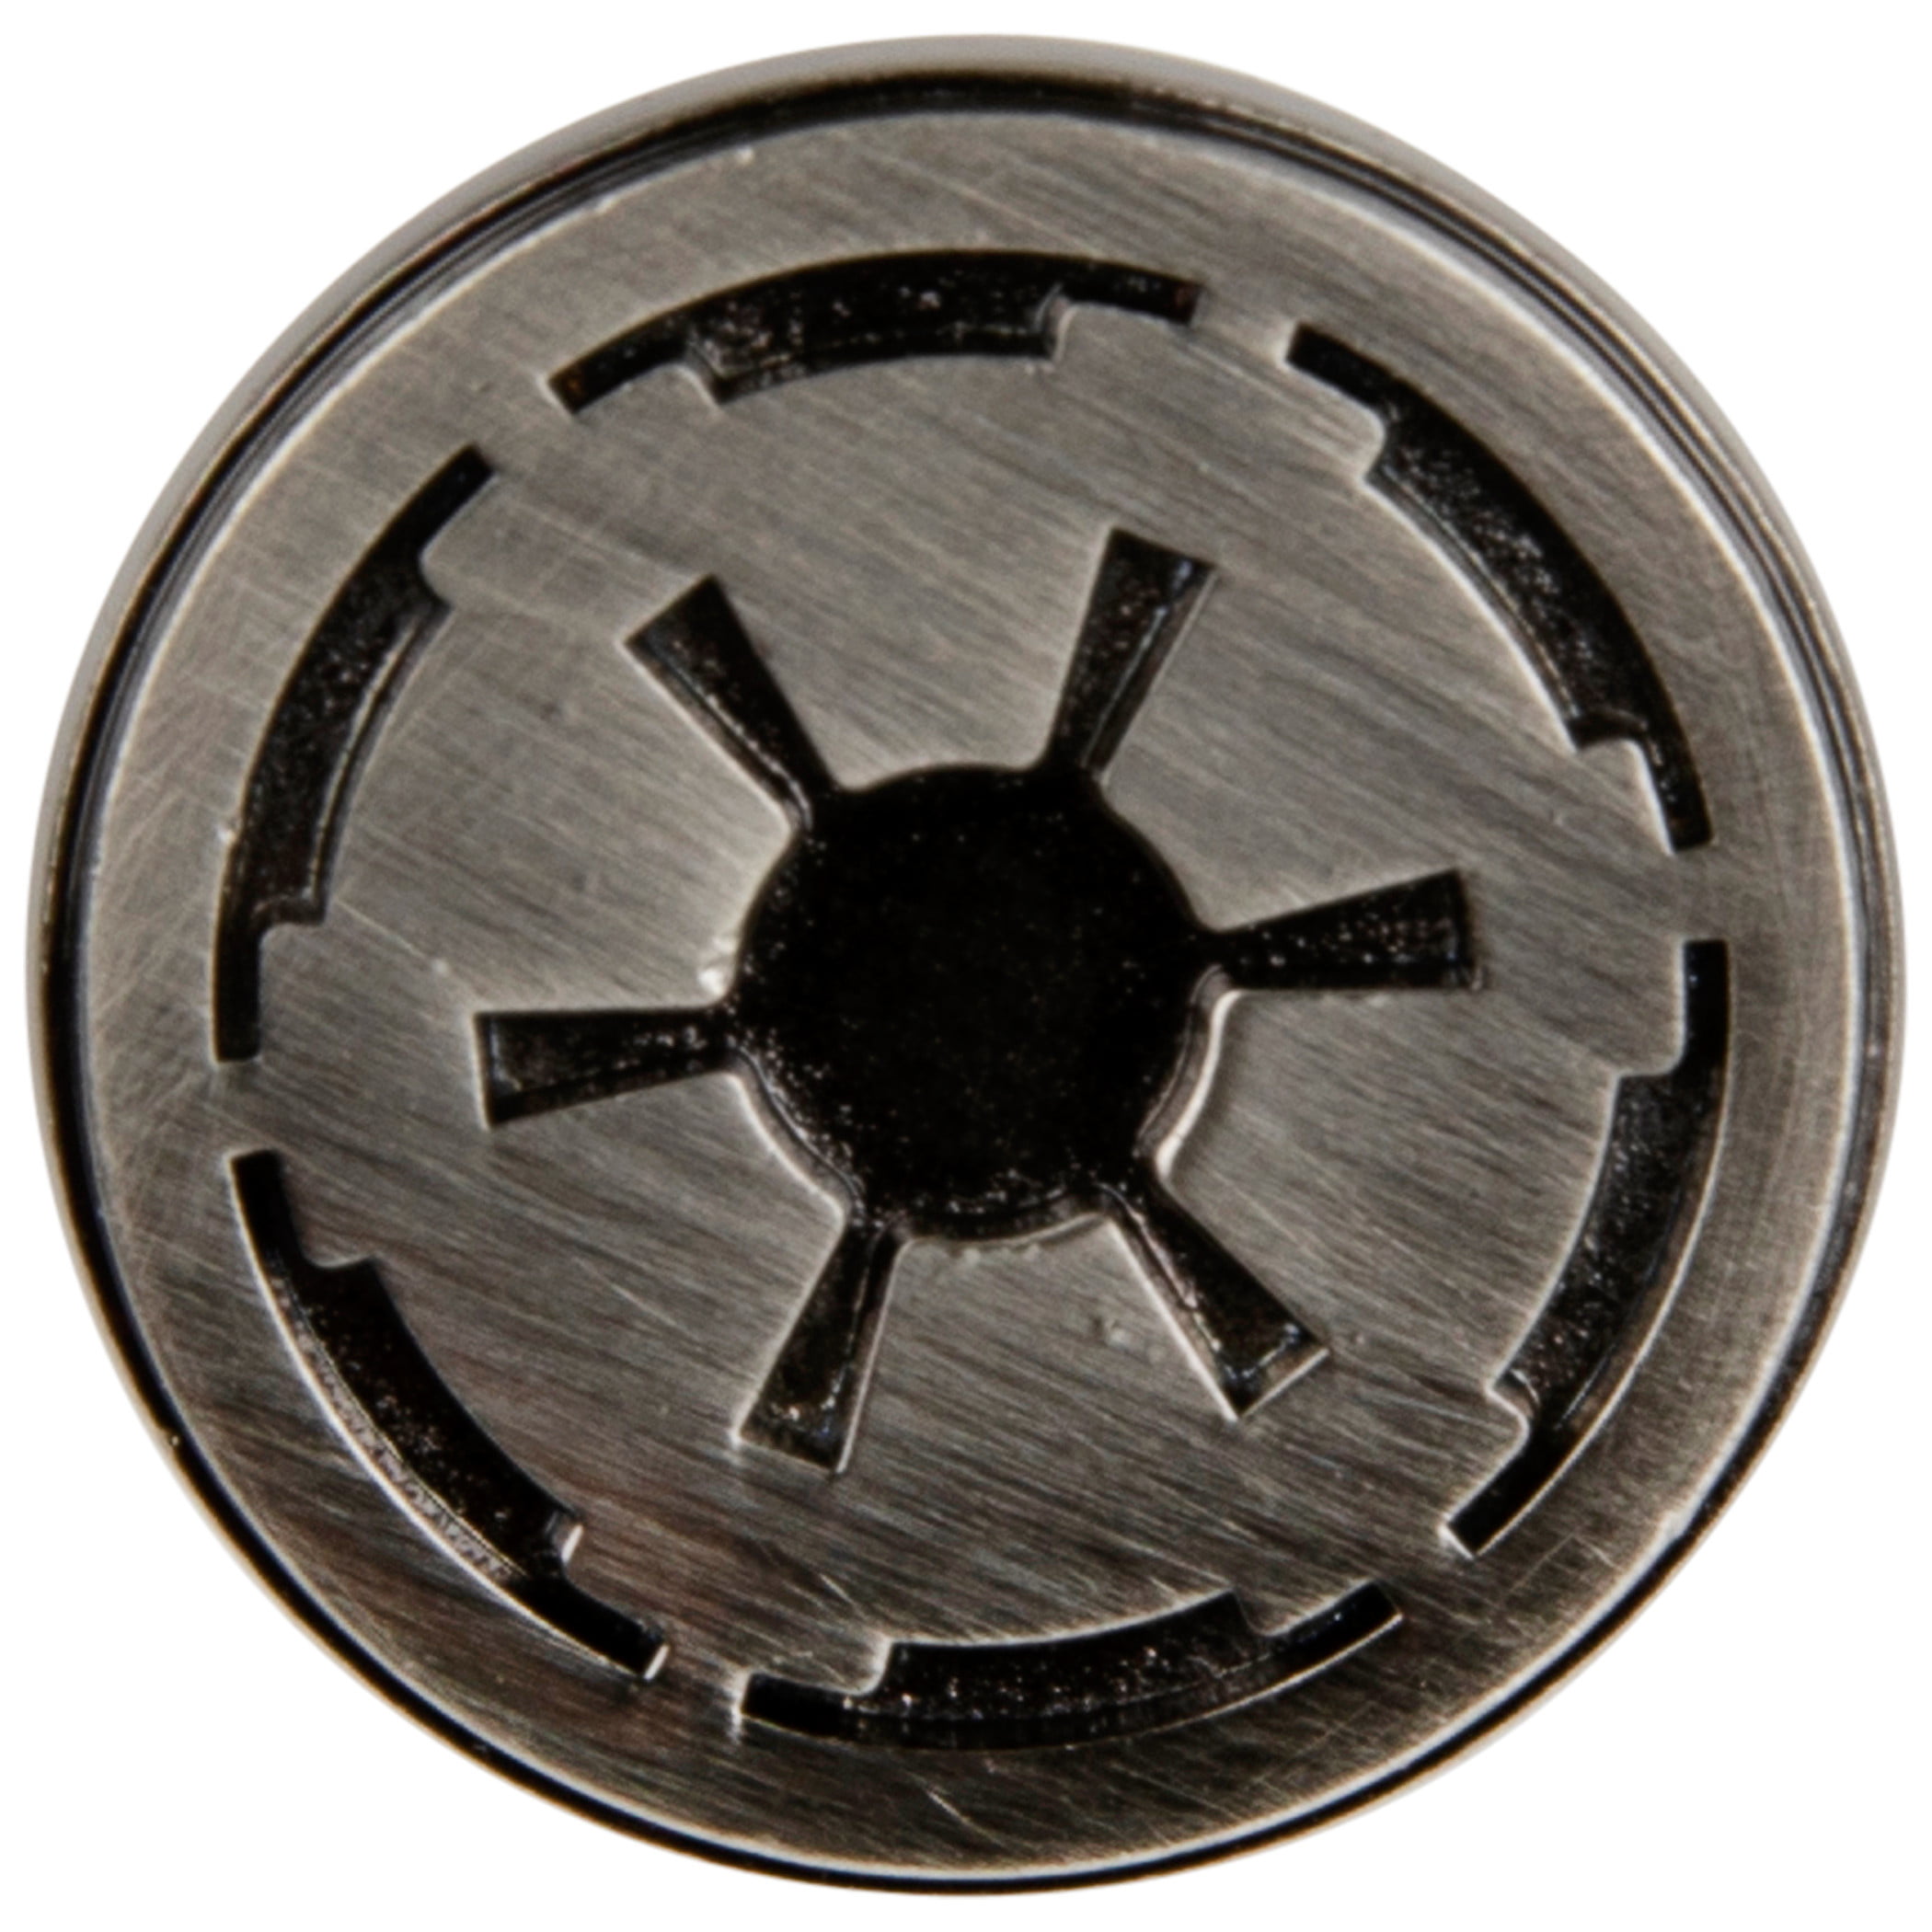 Star Wars R2D2 Pewter Lapel Pin